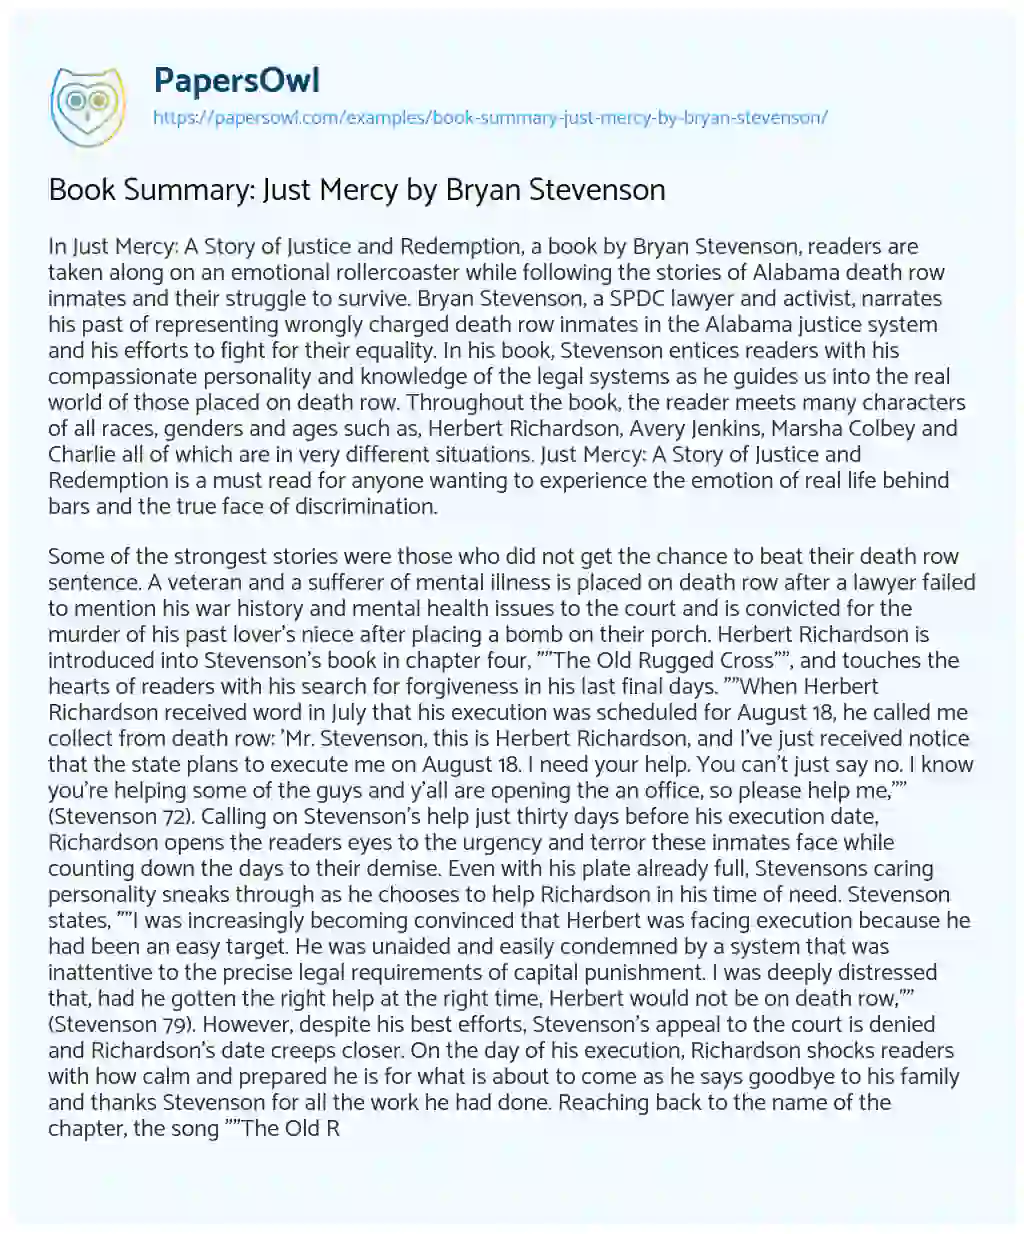 Essay on Book Summary: Just Mercy by Bryan Stevenson